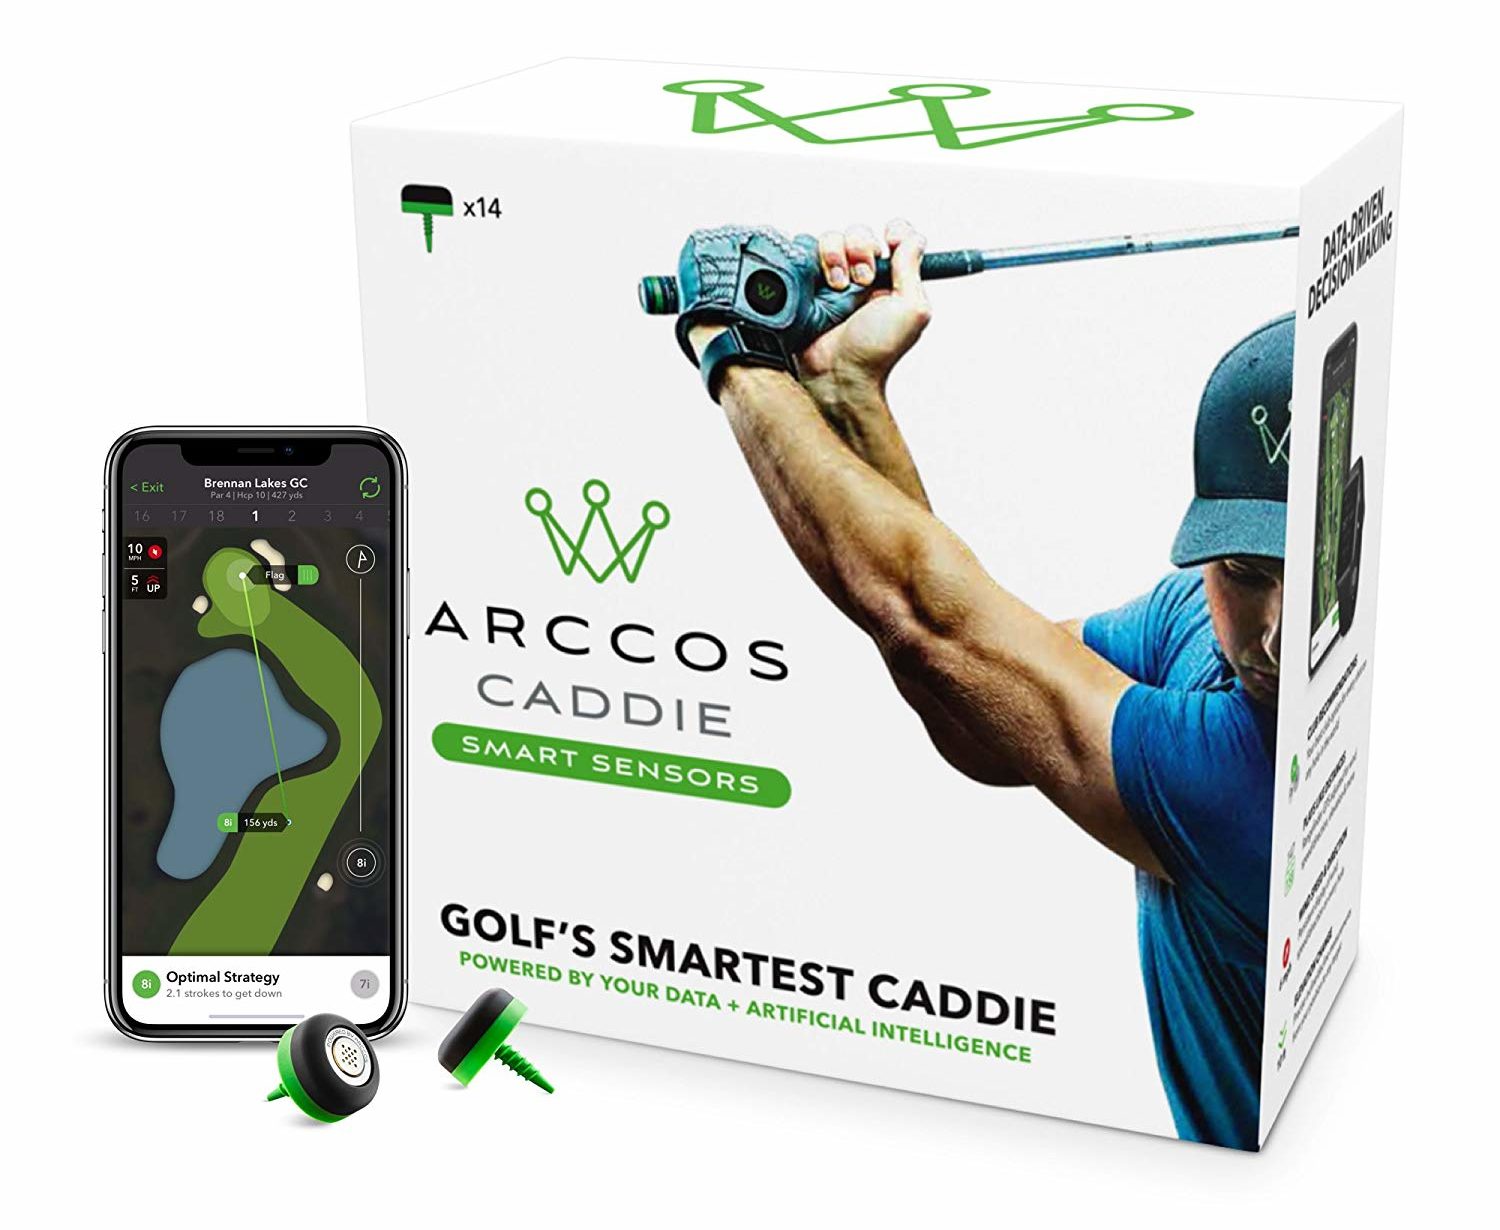 Uncle Gift Idea: Arccos Caddie Smart Golf Sensors